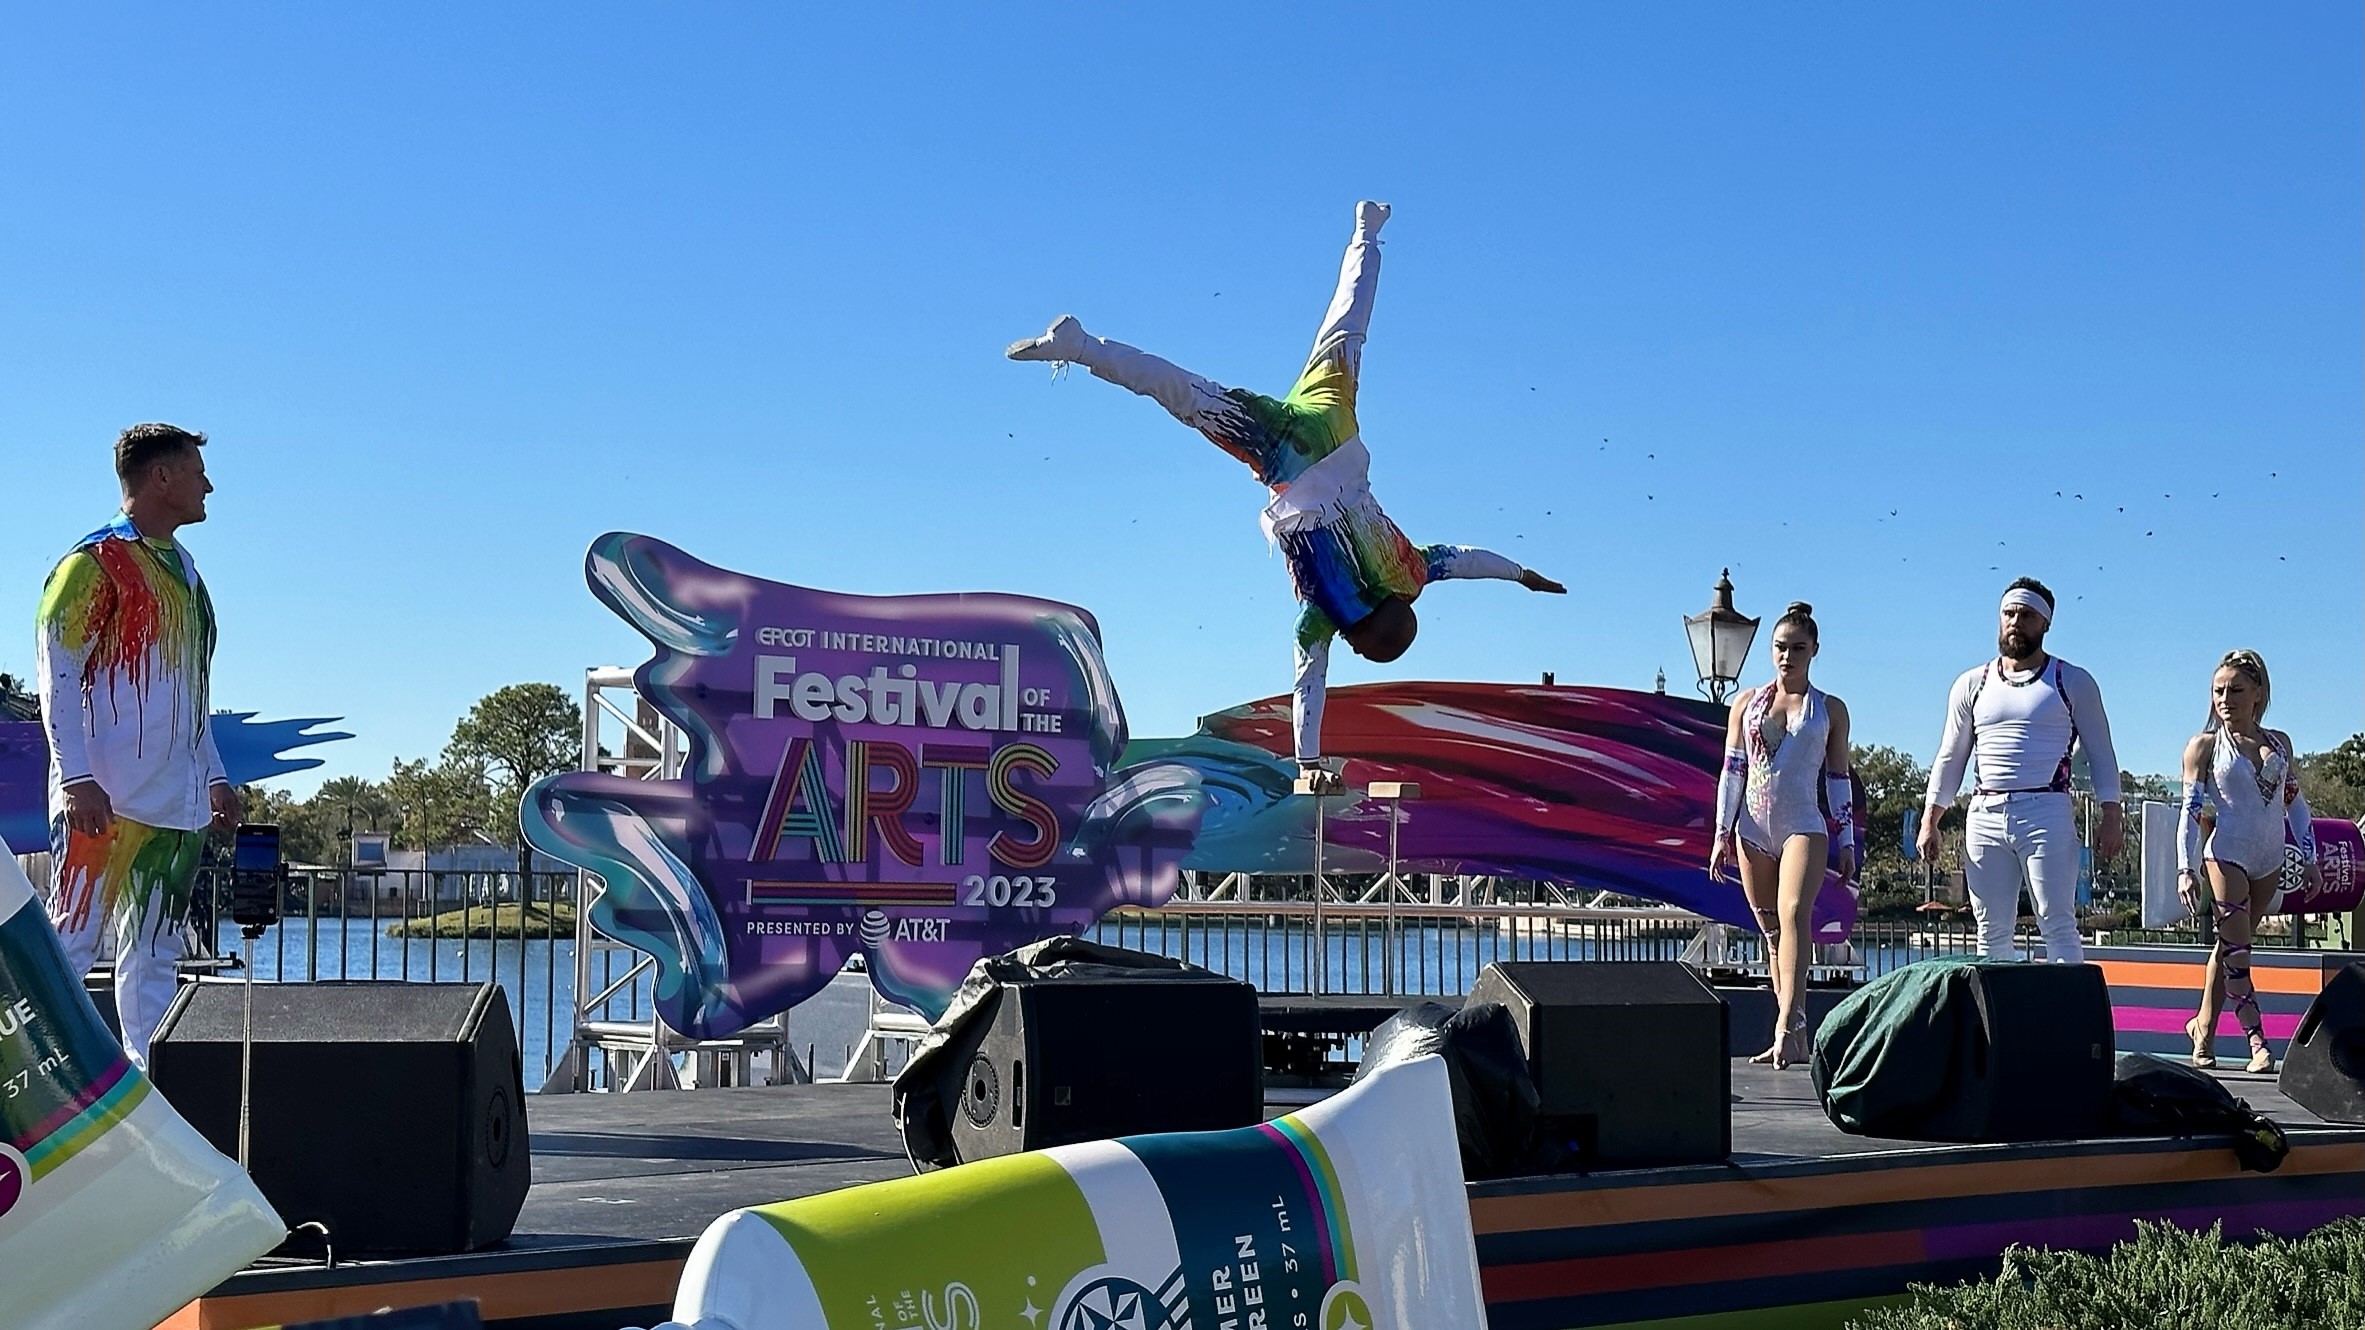 Epcot Festival of the Arts 2023: Art Defying Gravity Performance Art